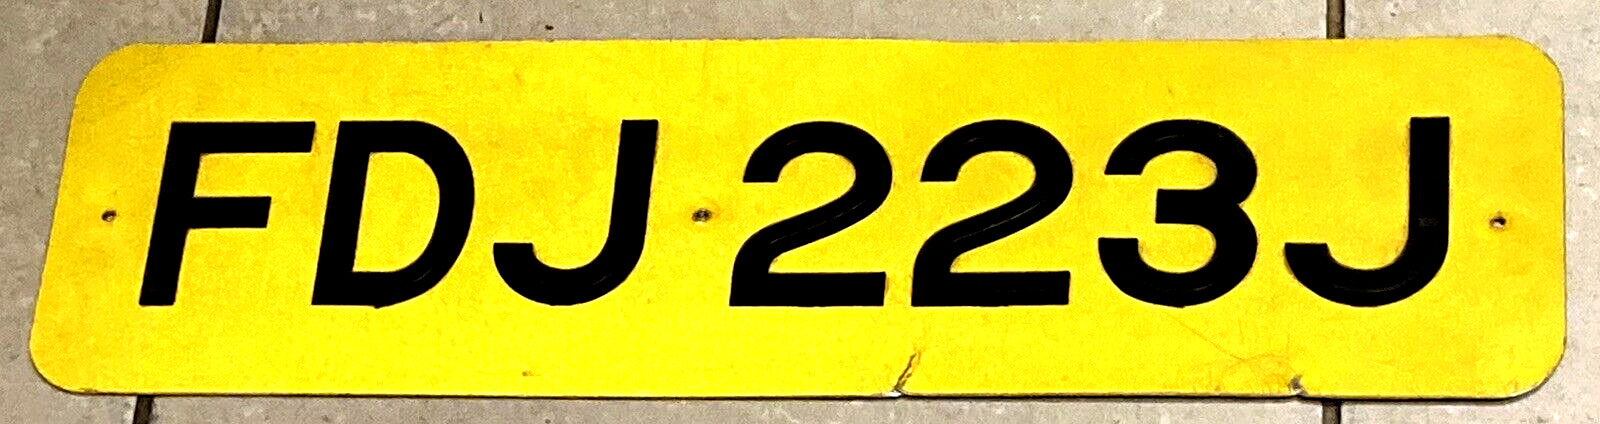 England license number plate British MASSIVE OVER 22\